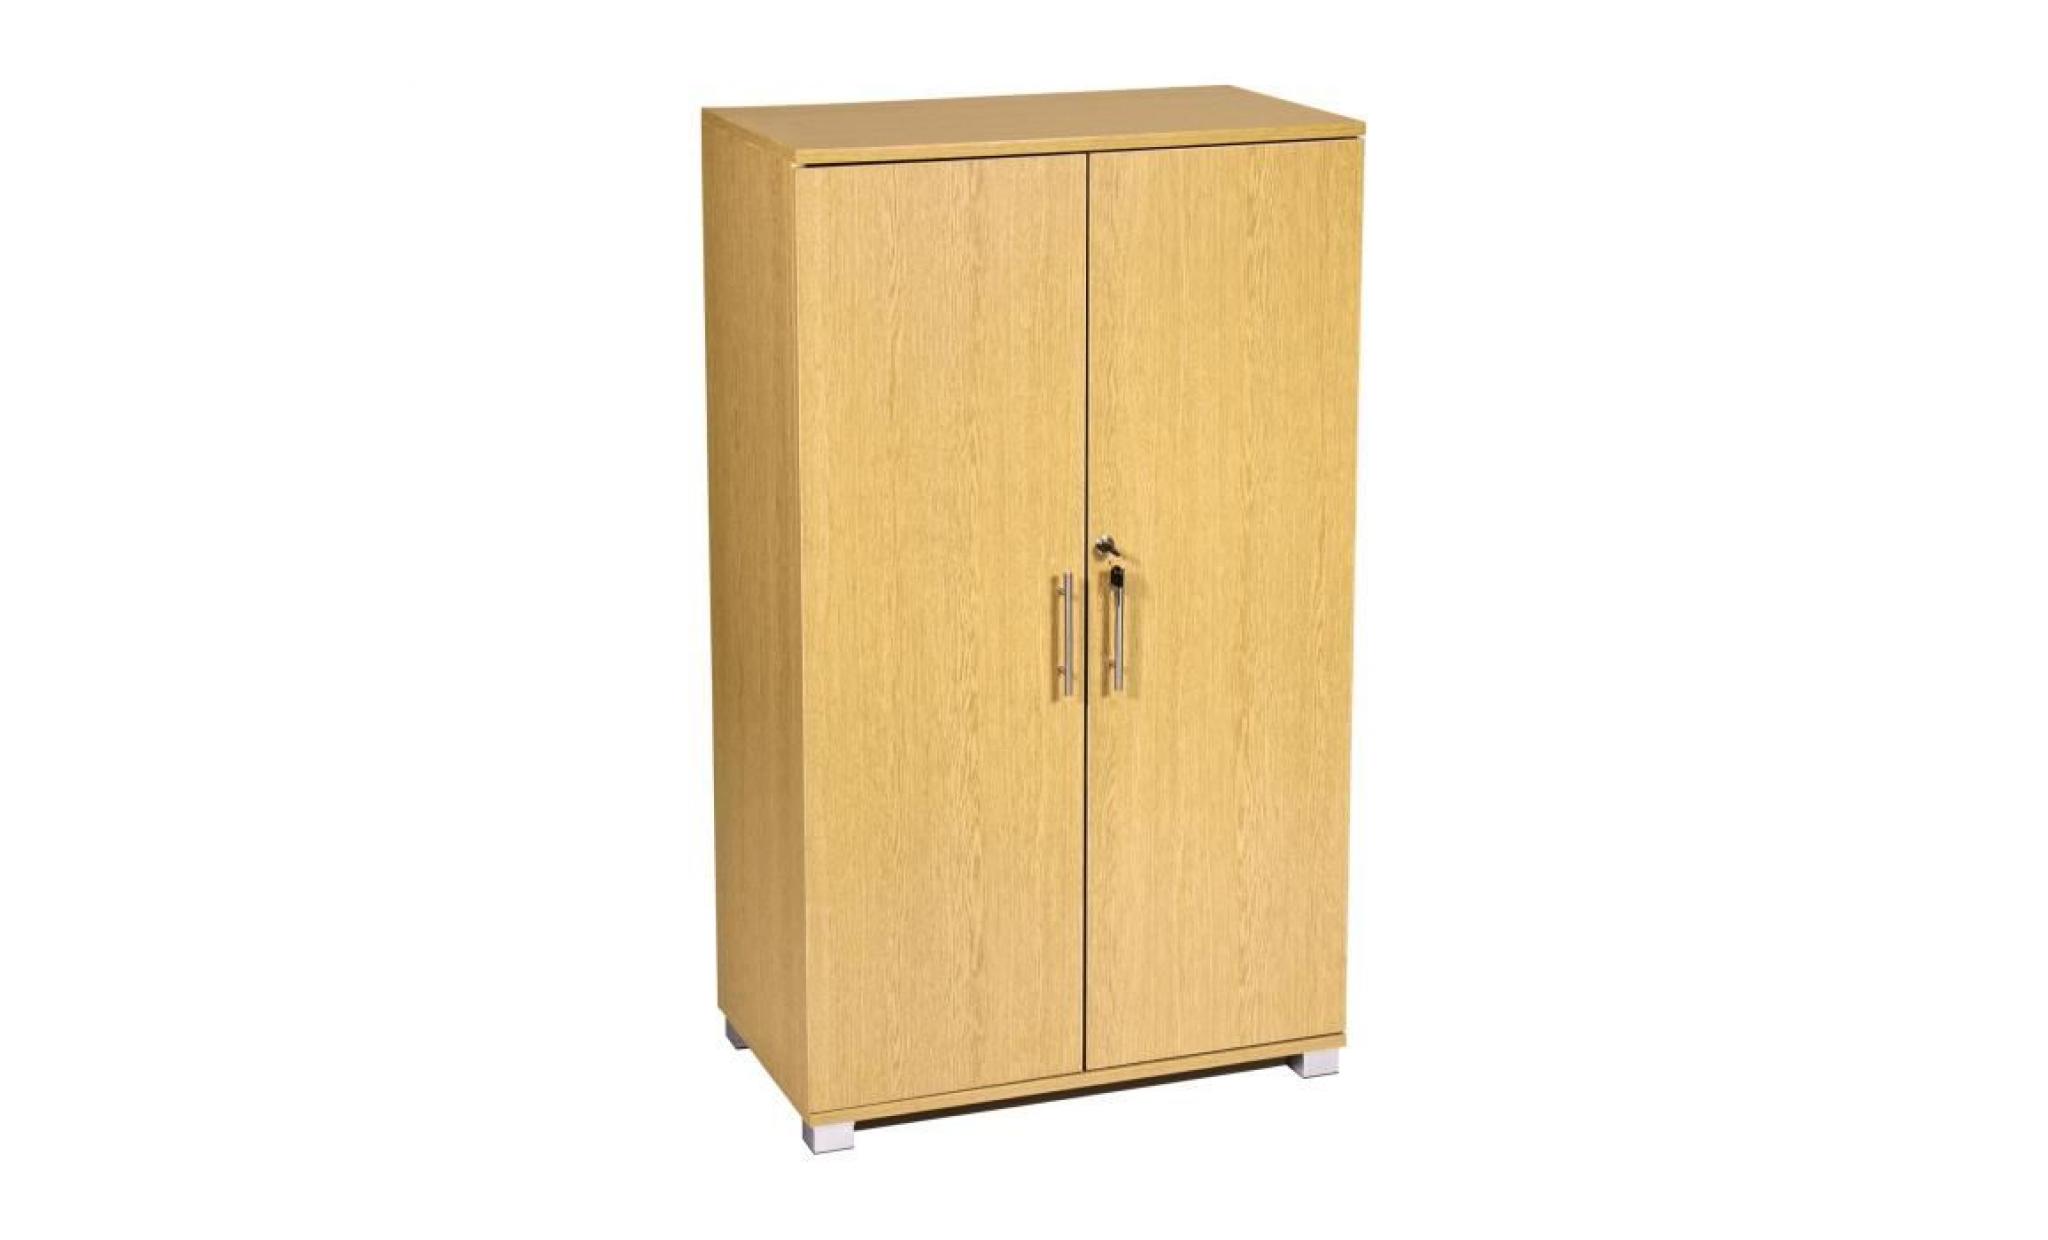 mmt sd iv04lockable storage cupboard filing cabinet 120cm tall